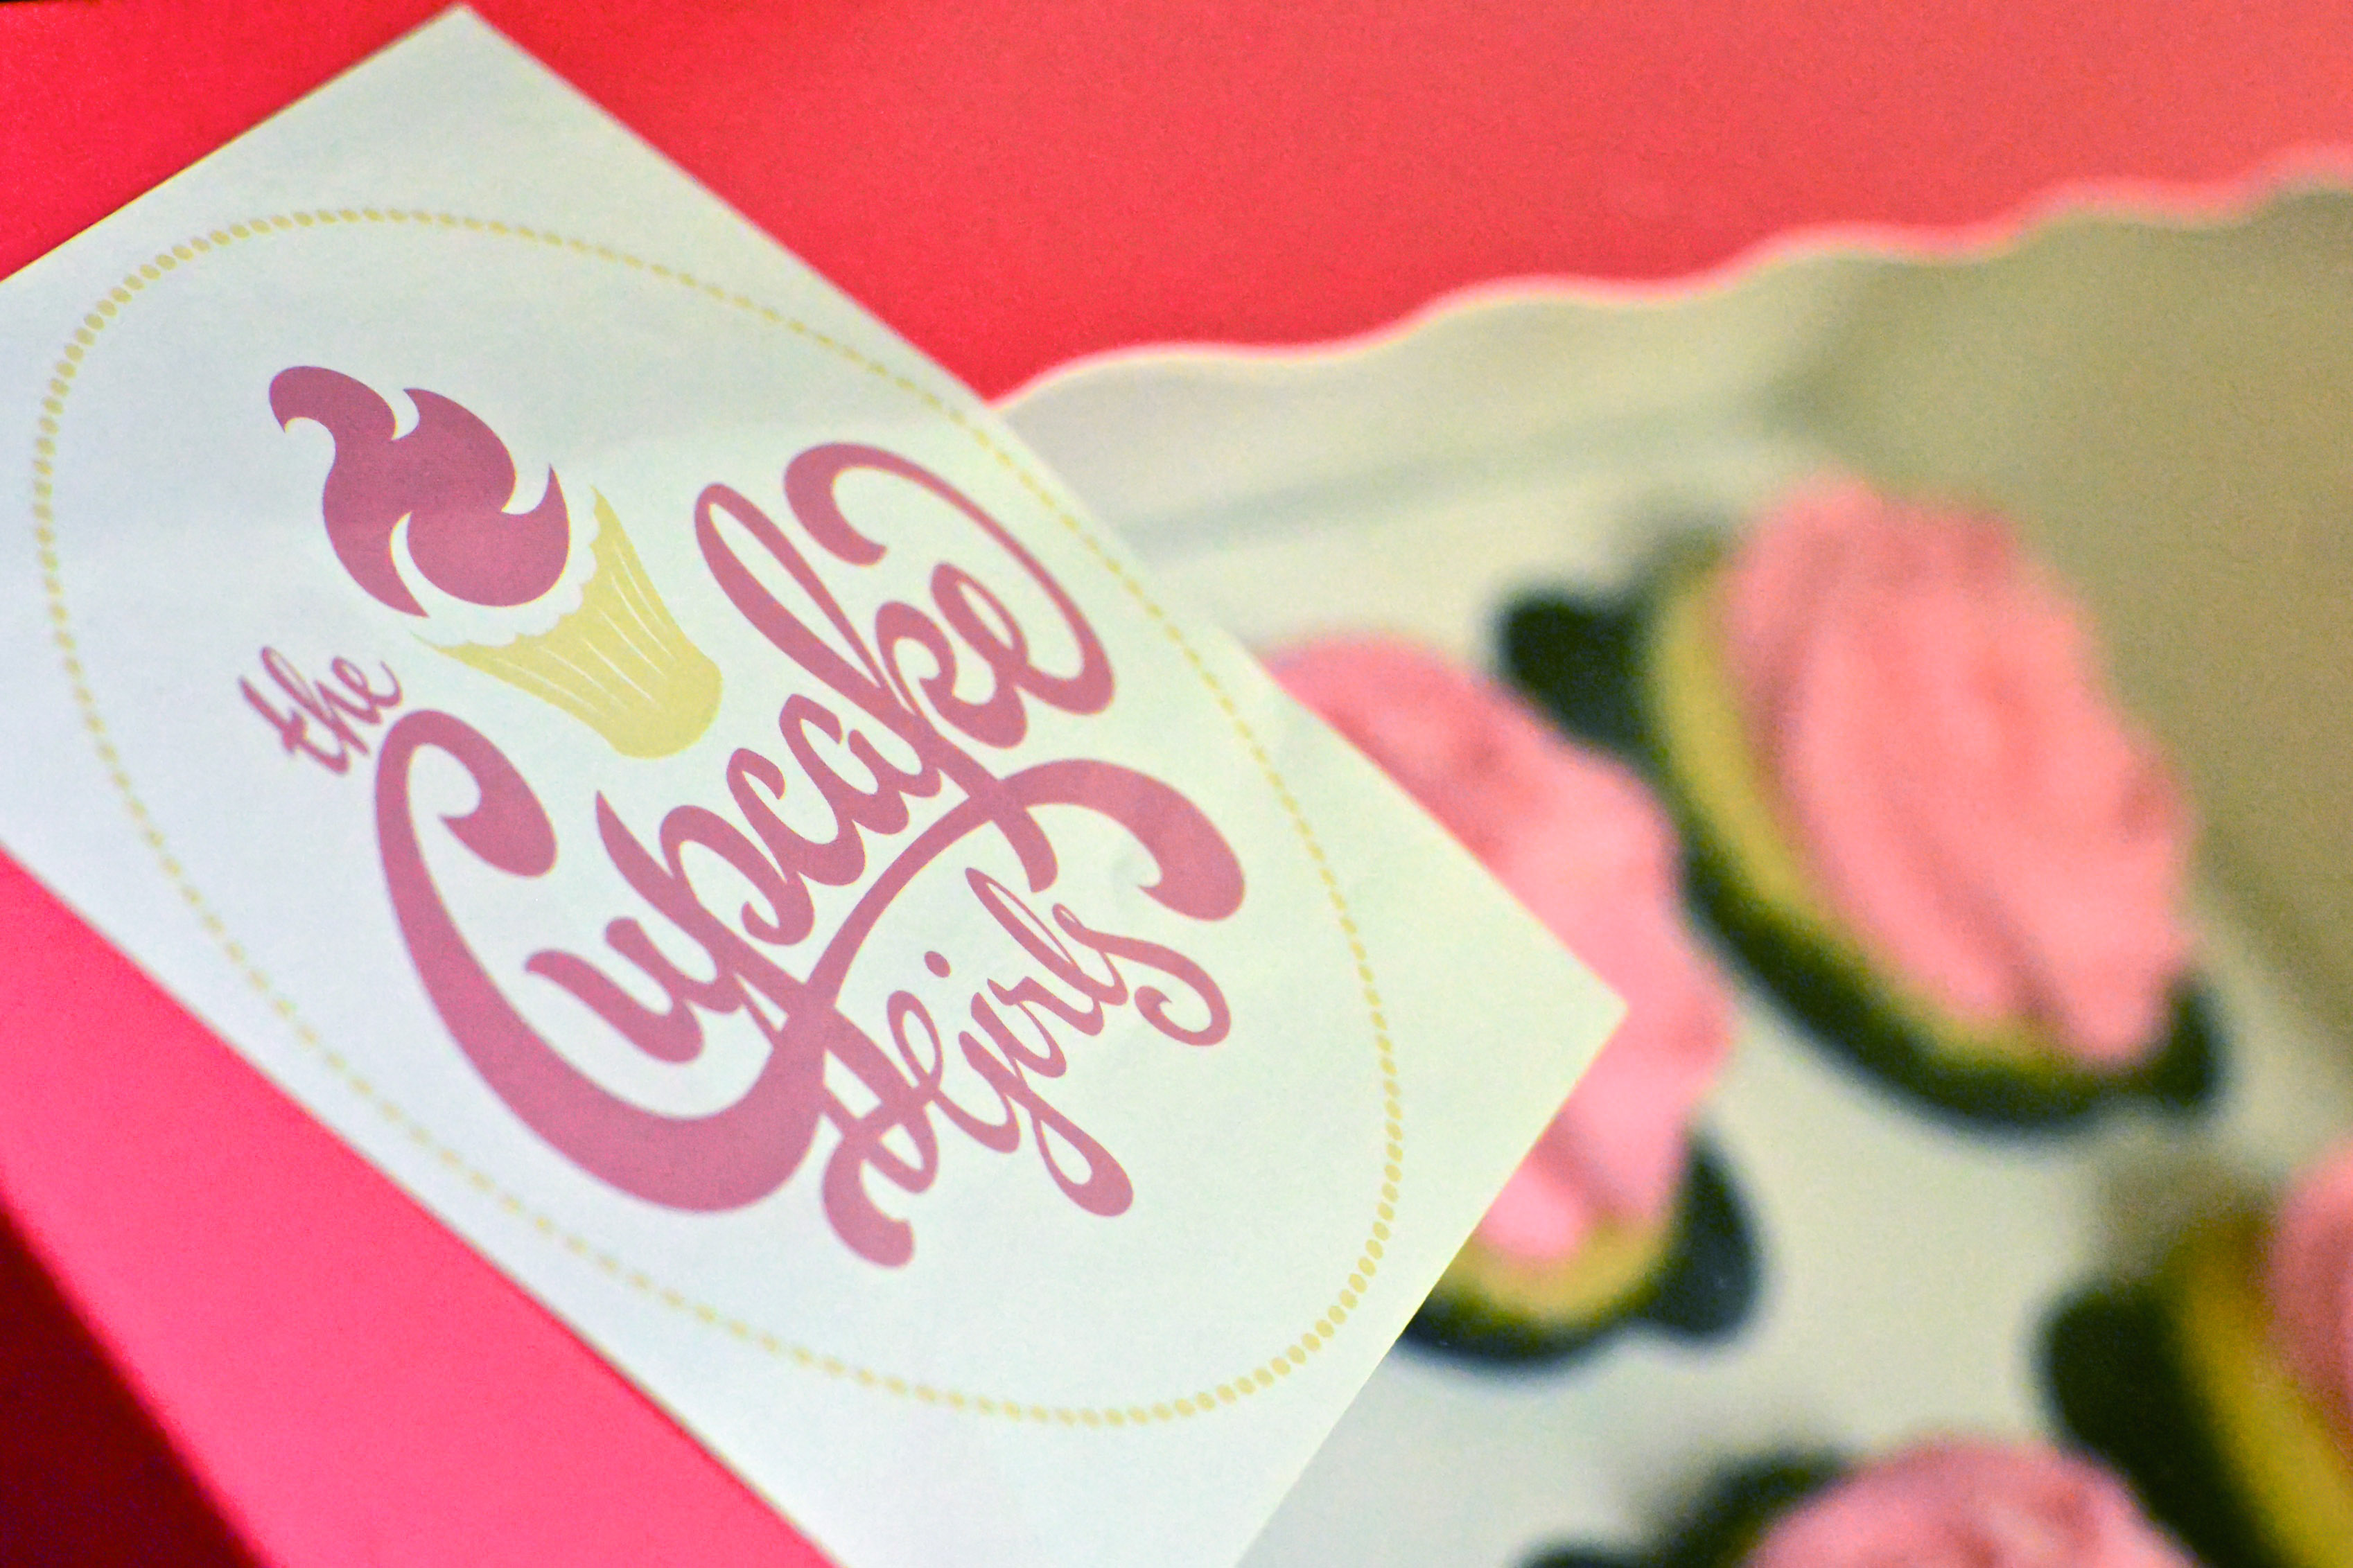 CAM4 Community Raises $4,800 for The Cupcake Girls